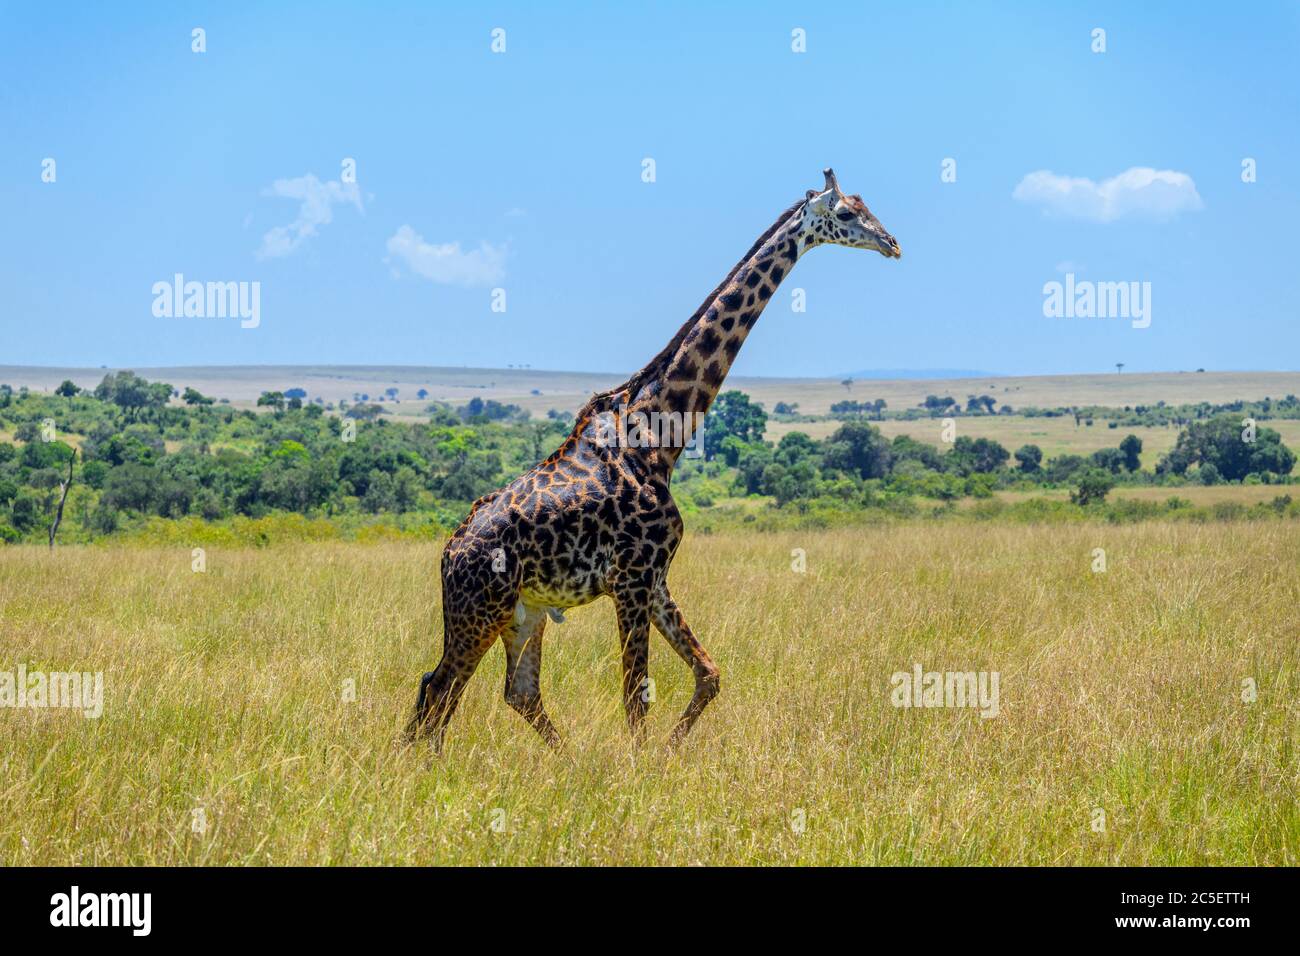 Jirafa Masai (Giraffa camelopardalis tippelskirchii). Gran macho Masai Giraffe en la Reserva Nacional Masai Mara, Kenia, África Foto de stock